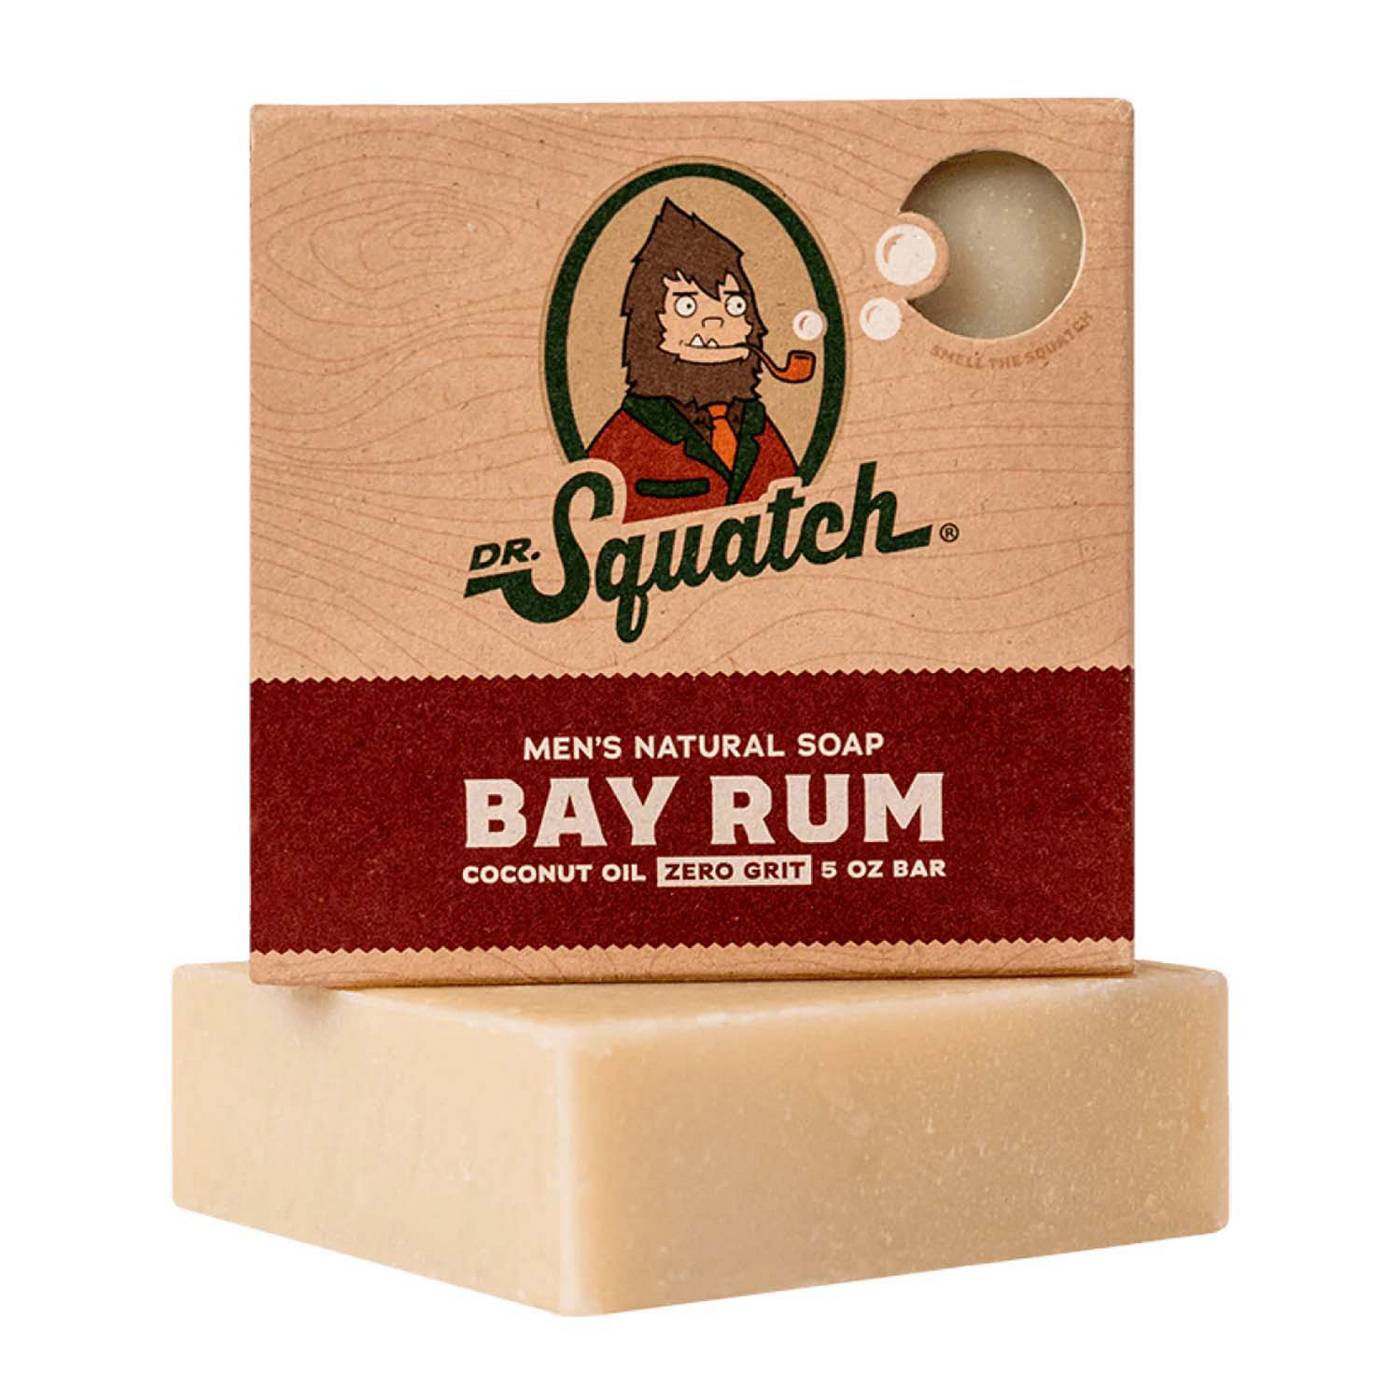 Dr. Squatch Men's Natural Soap - Bay Rum; image 5 of 5